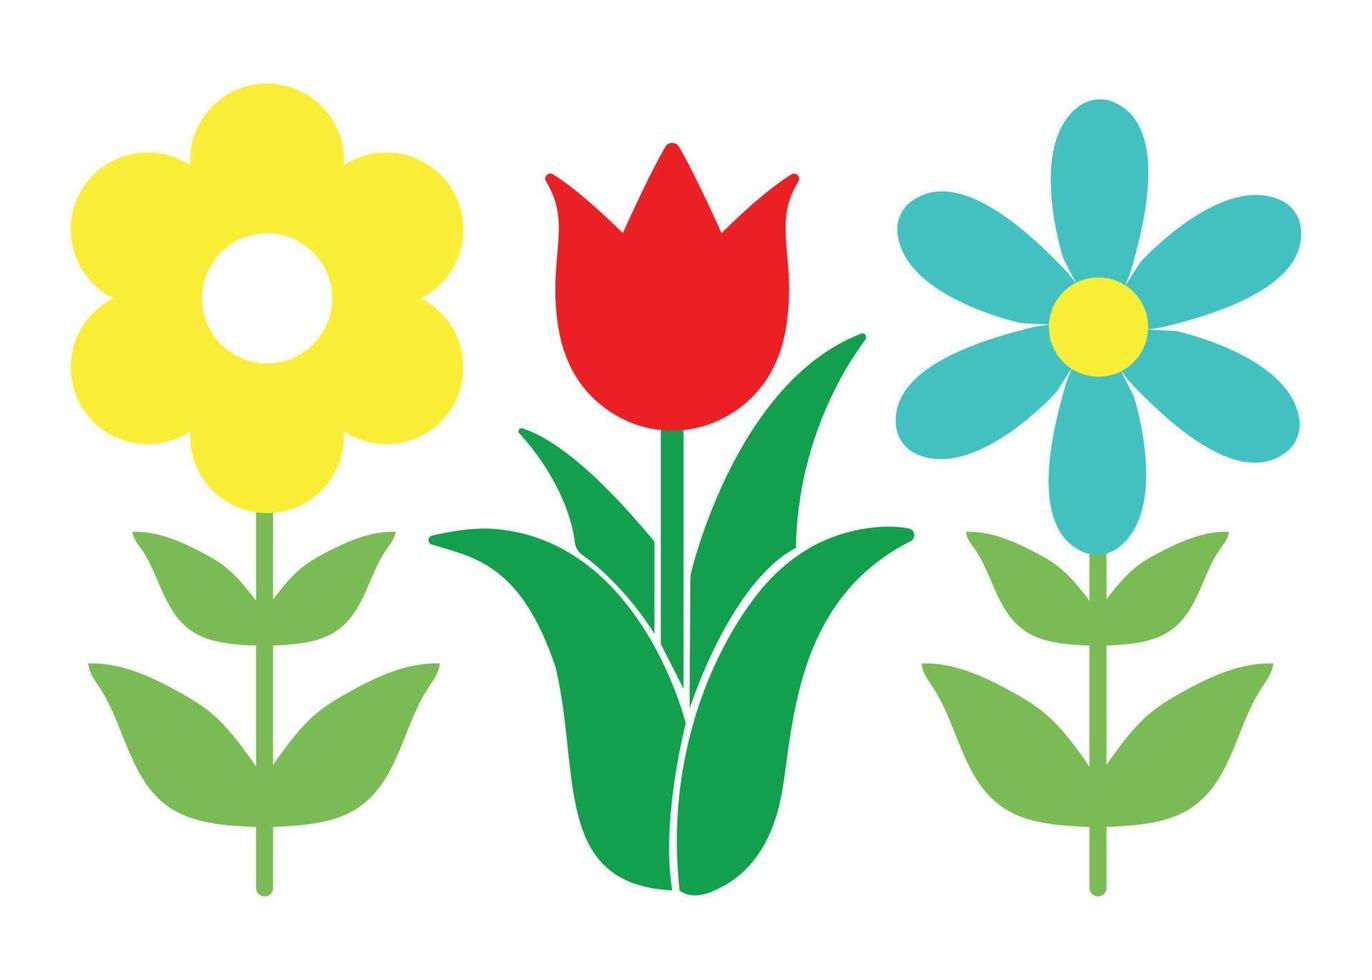 simple flower set design minimalist style floral basic shape illustration vector